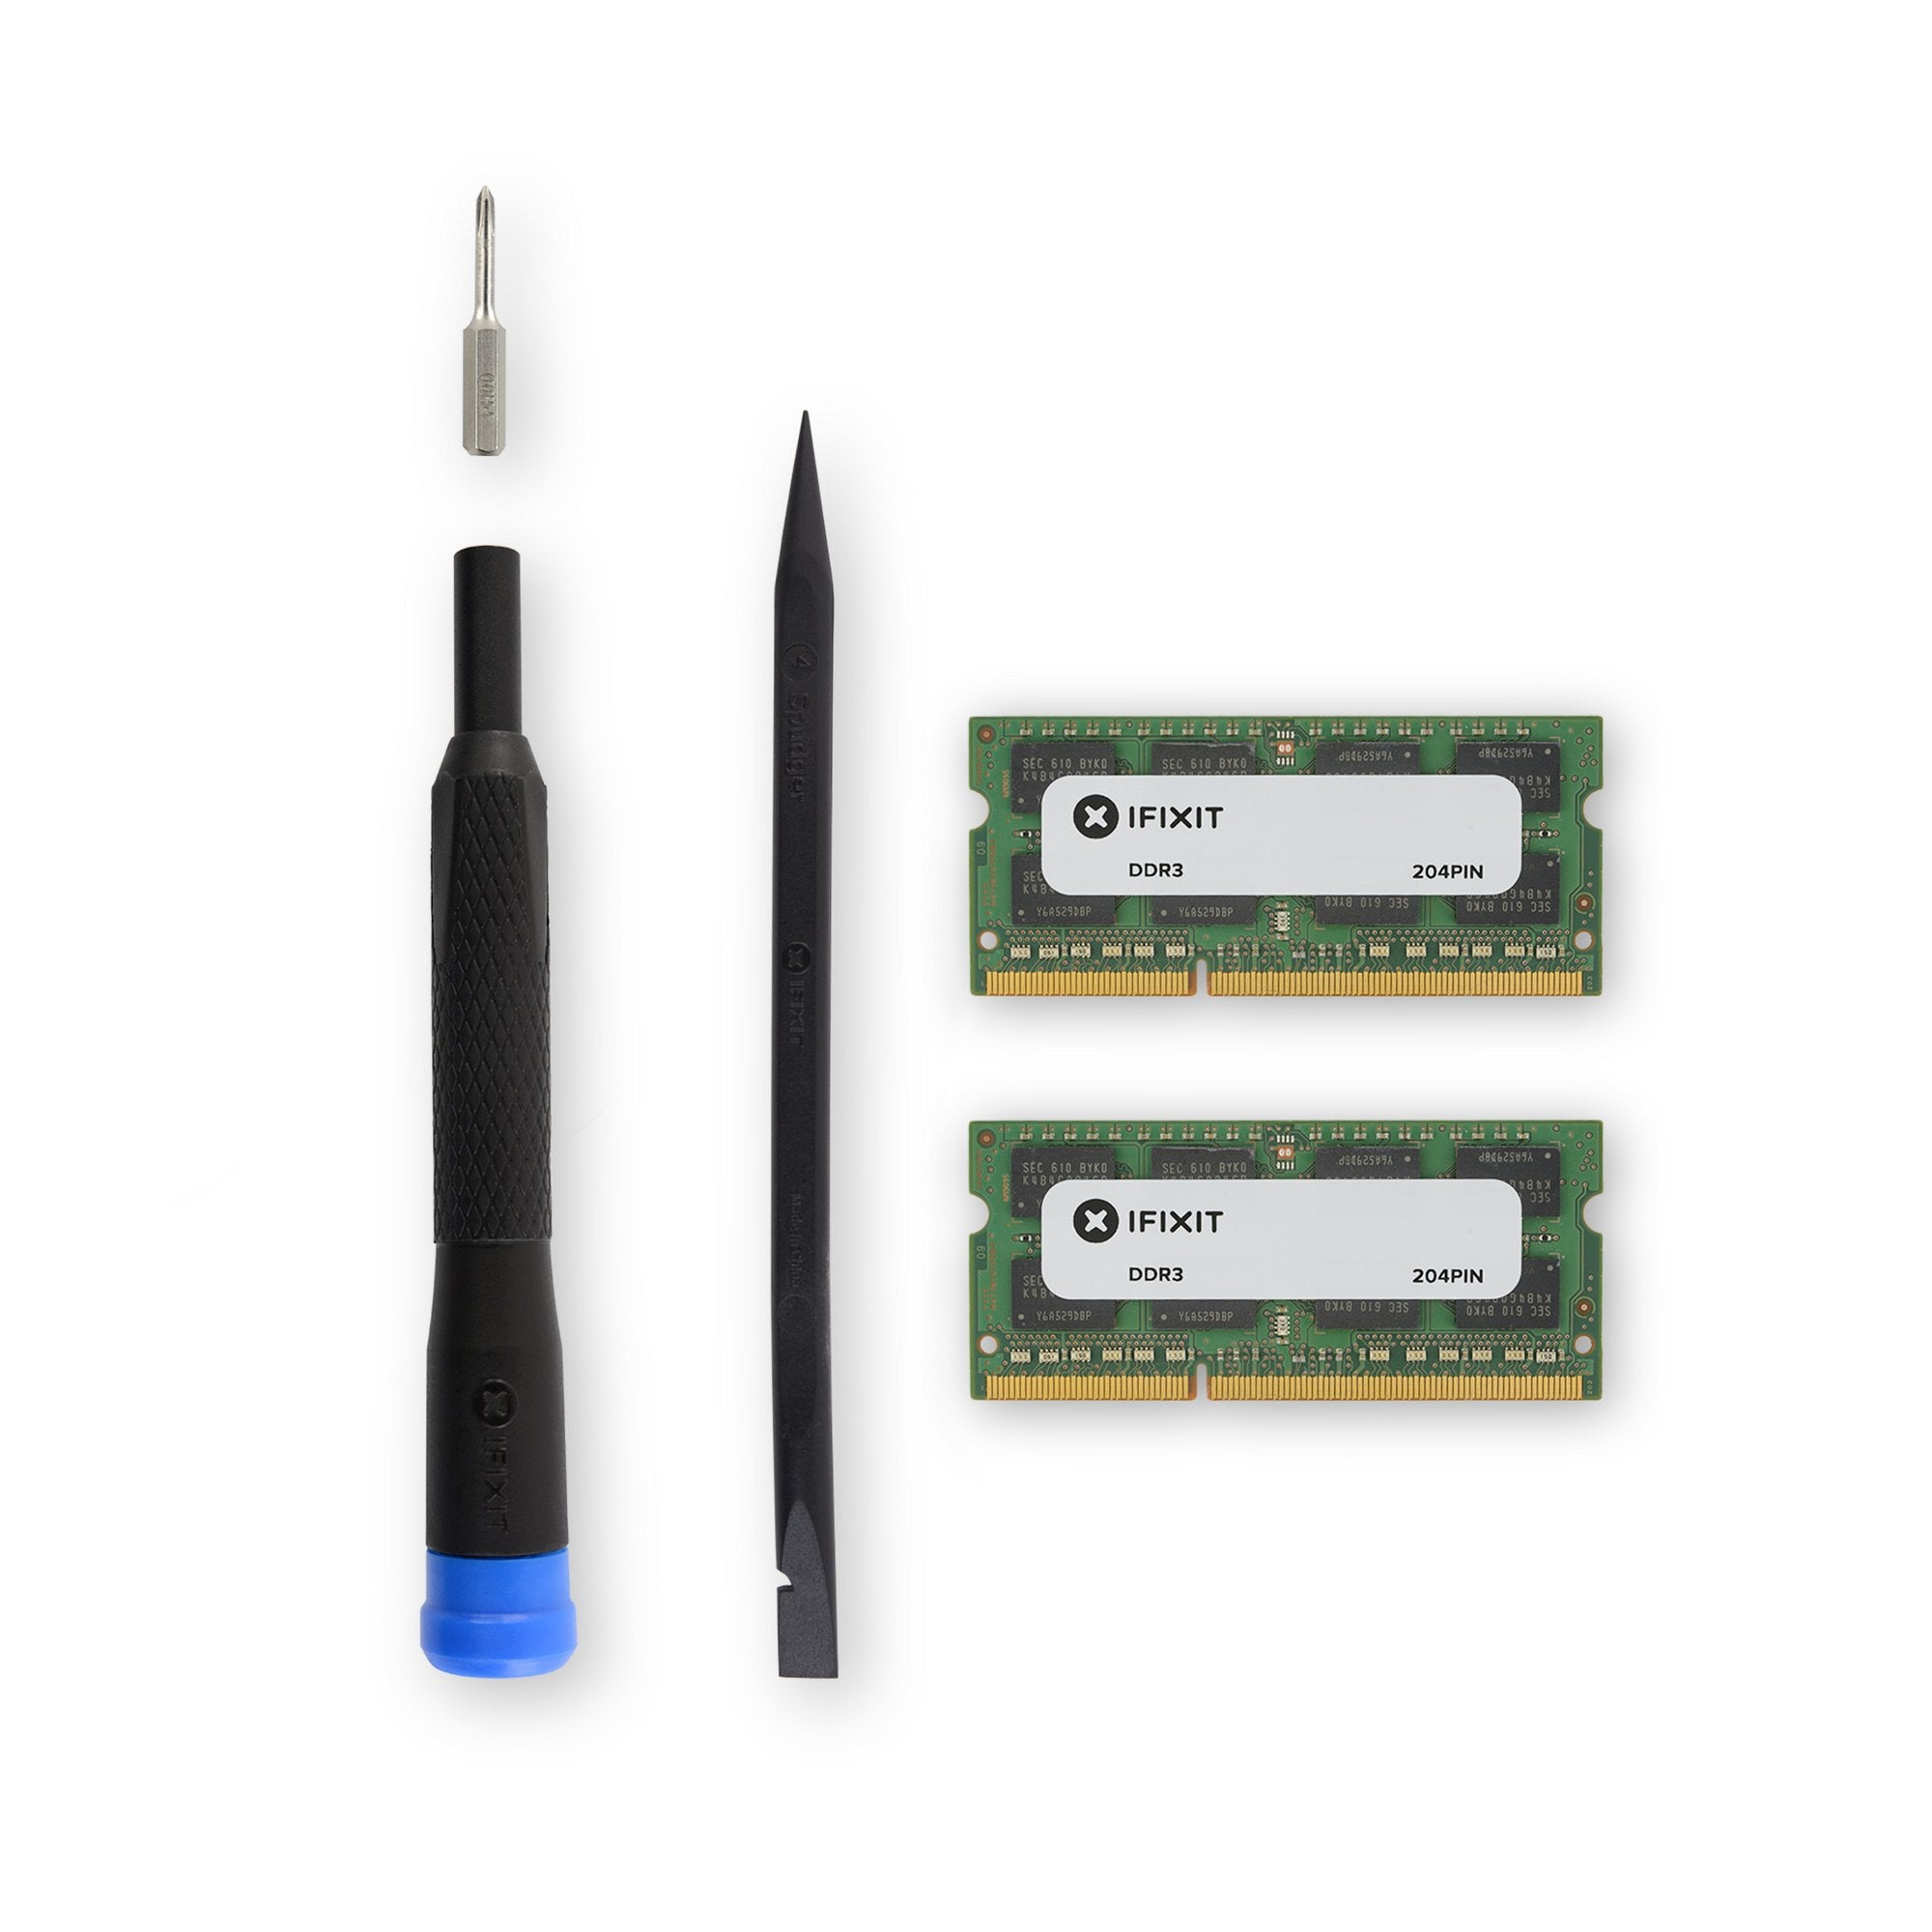 MacBook Pro 15" Unibody (Late 2011) Memory Maxxer RAM Upgrade Kit